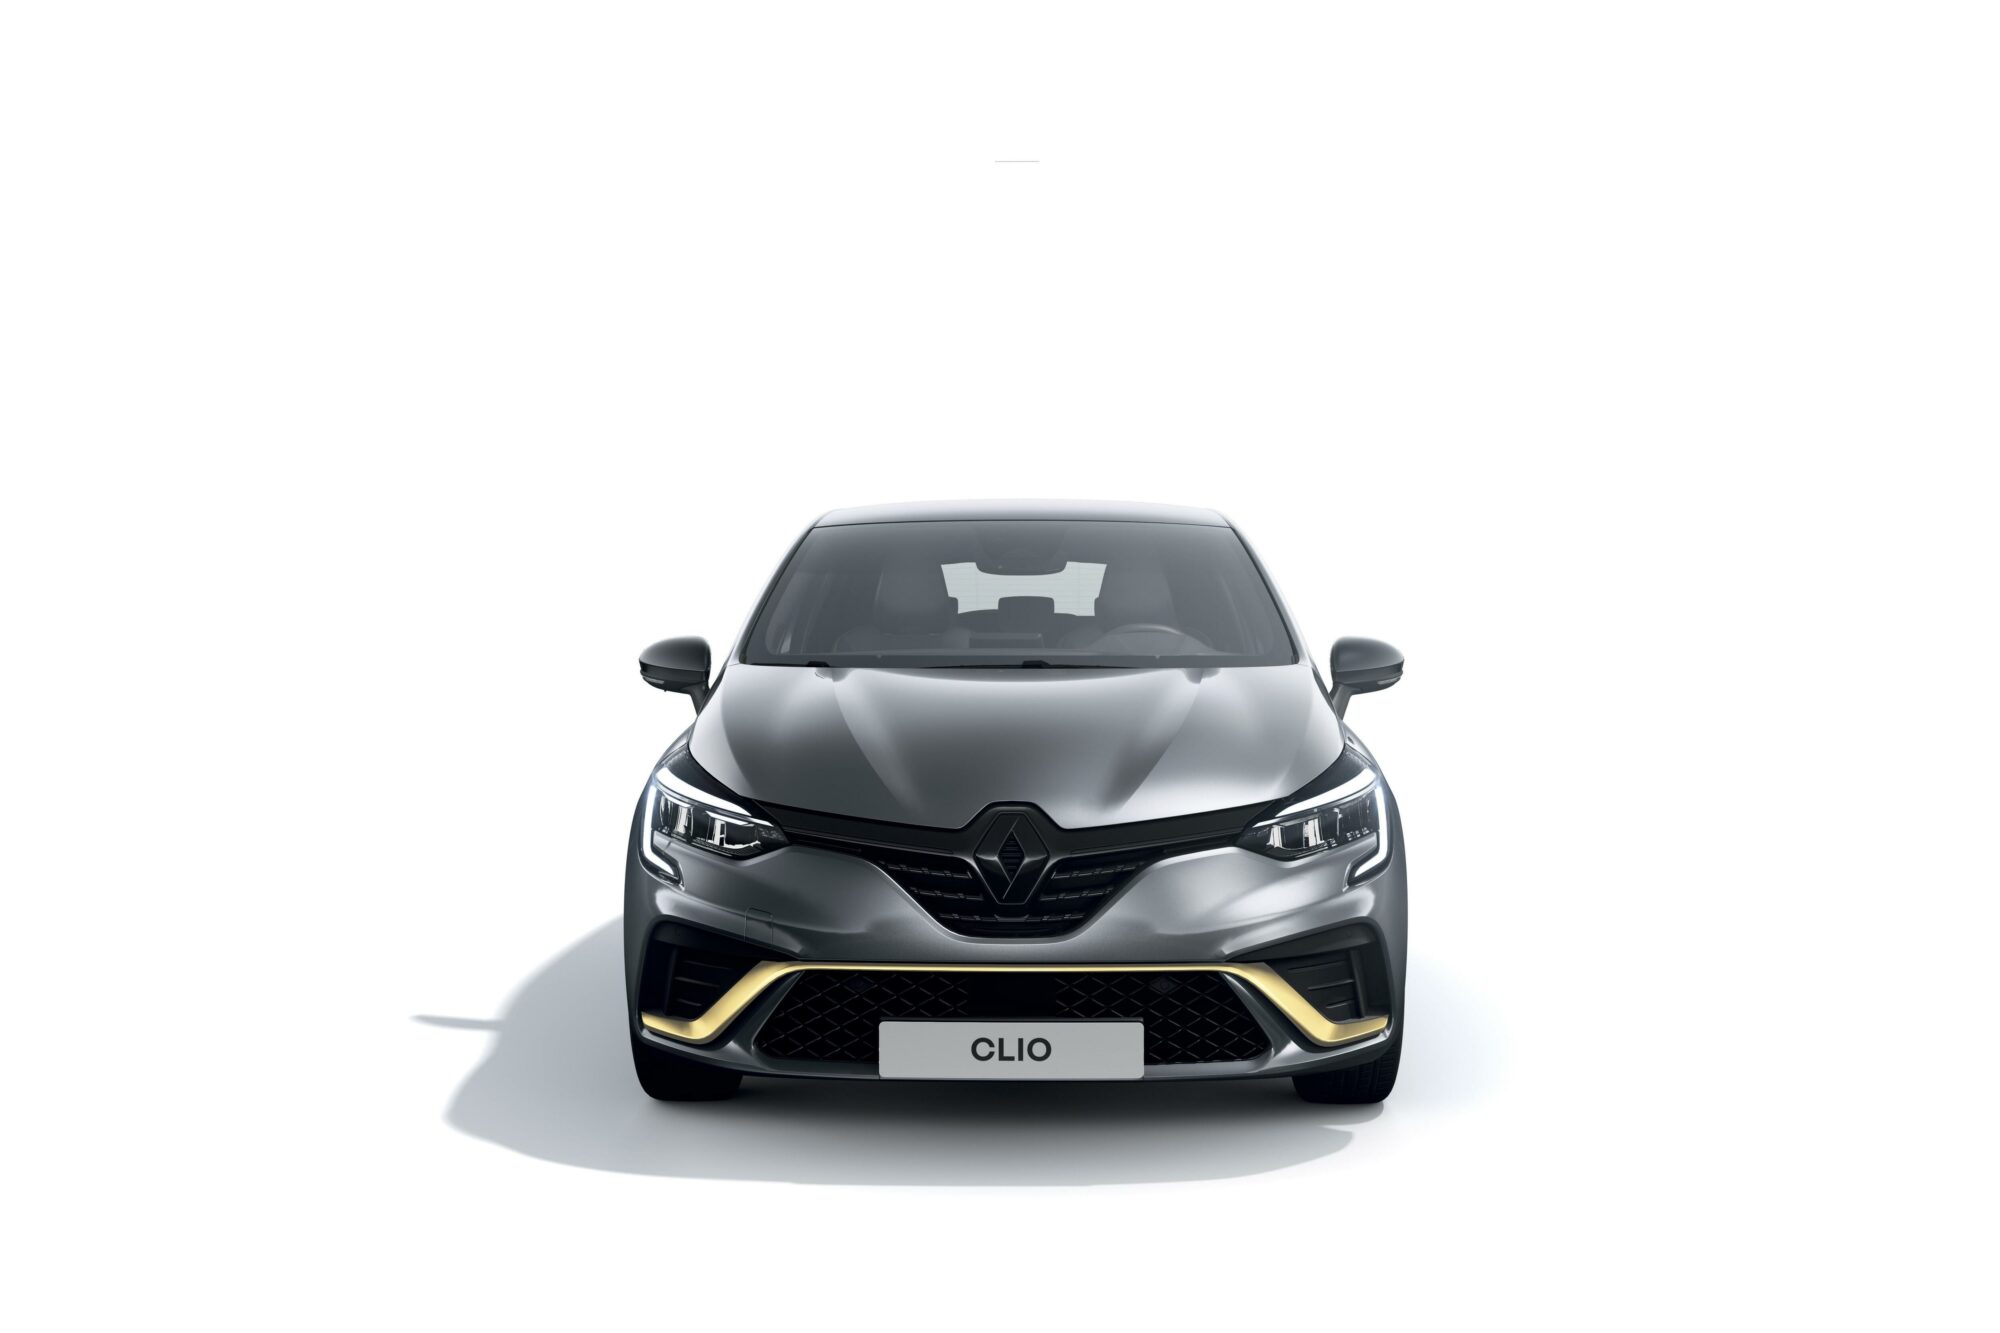 2022 - Renault CLIO E-Tech engineered (55)